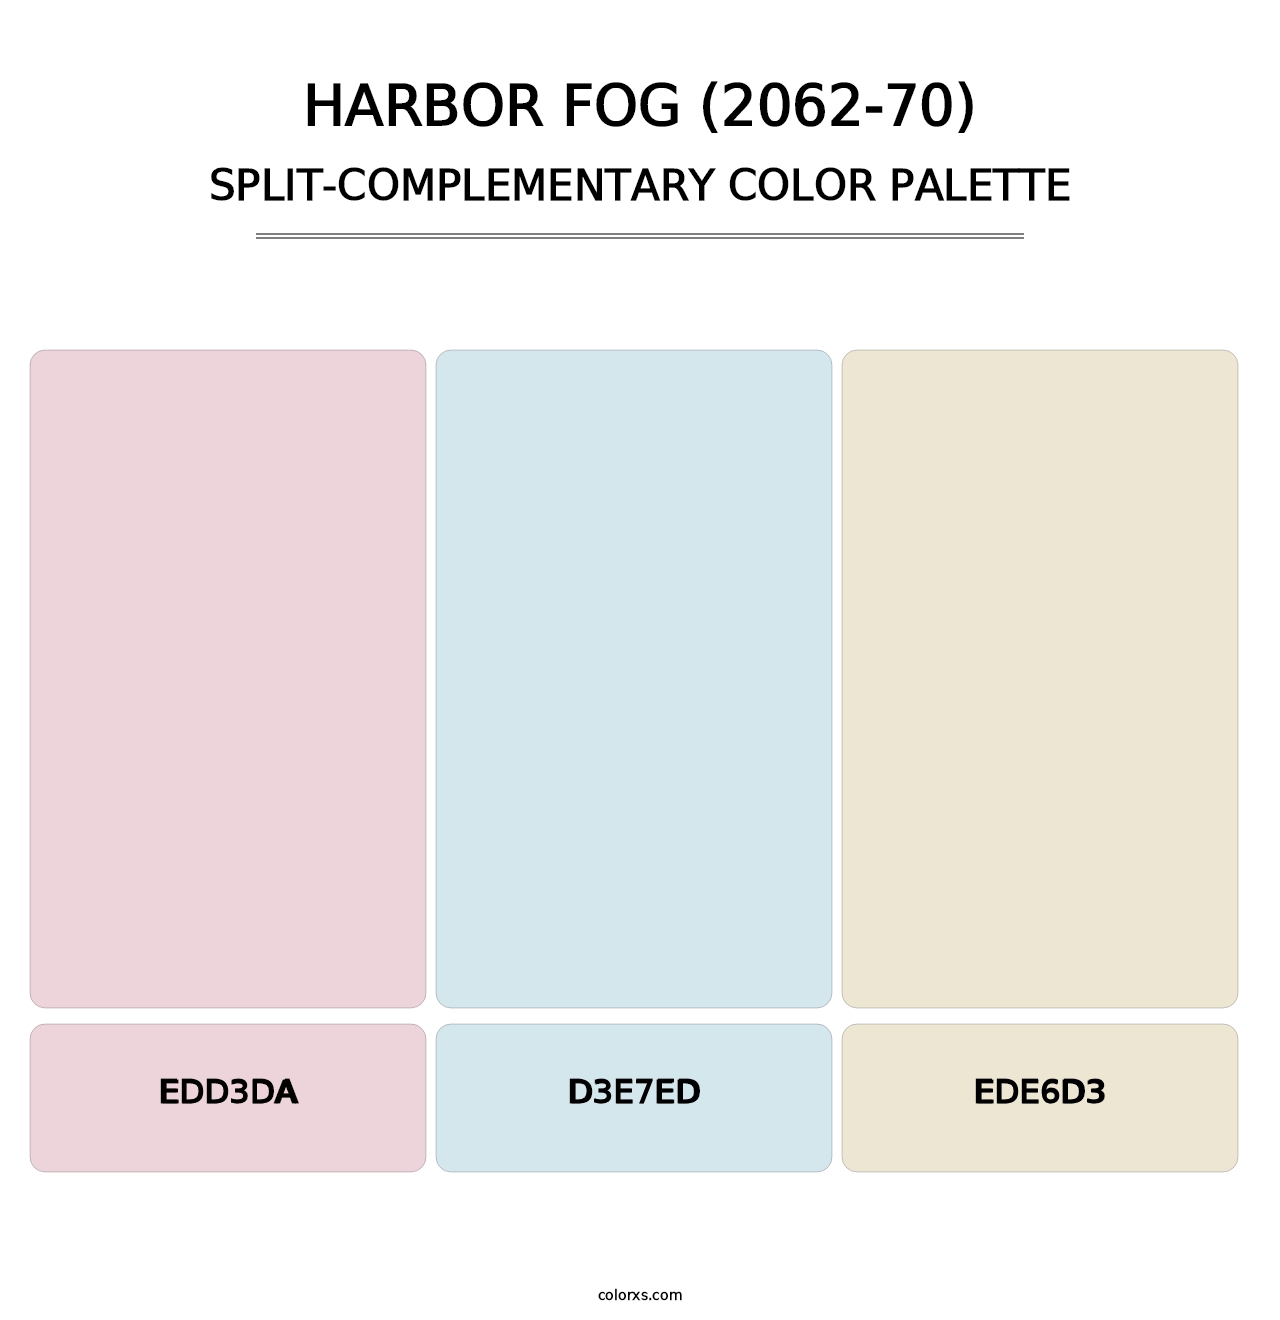 Harbor Fog (2062-70) - Split-Complementary Color Palette